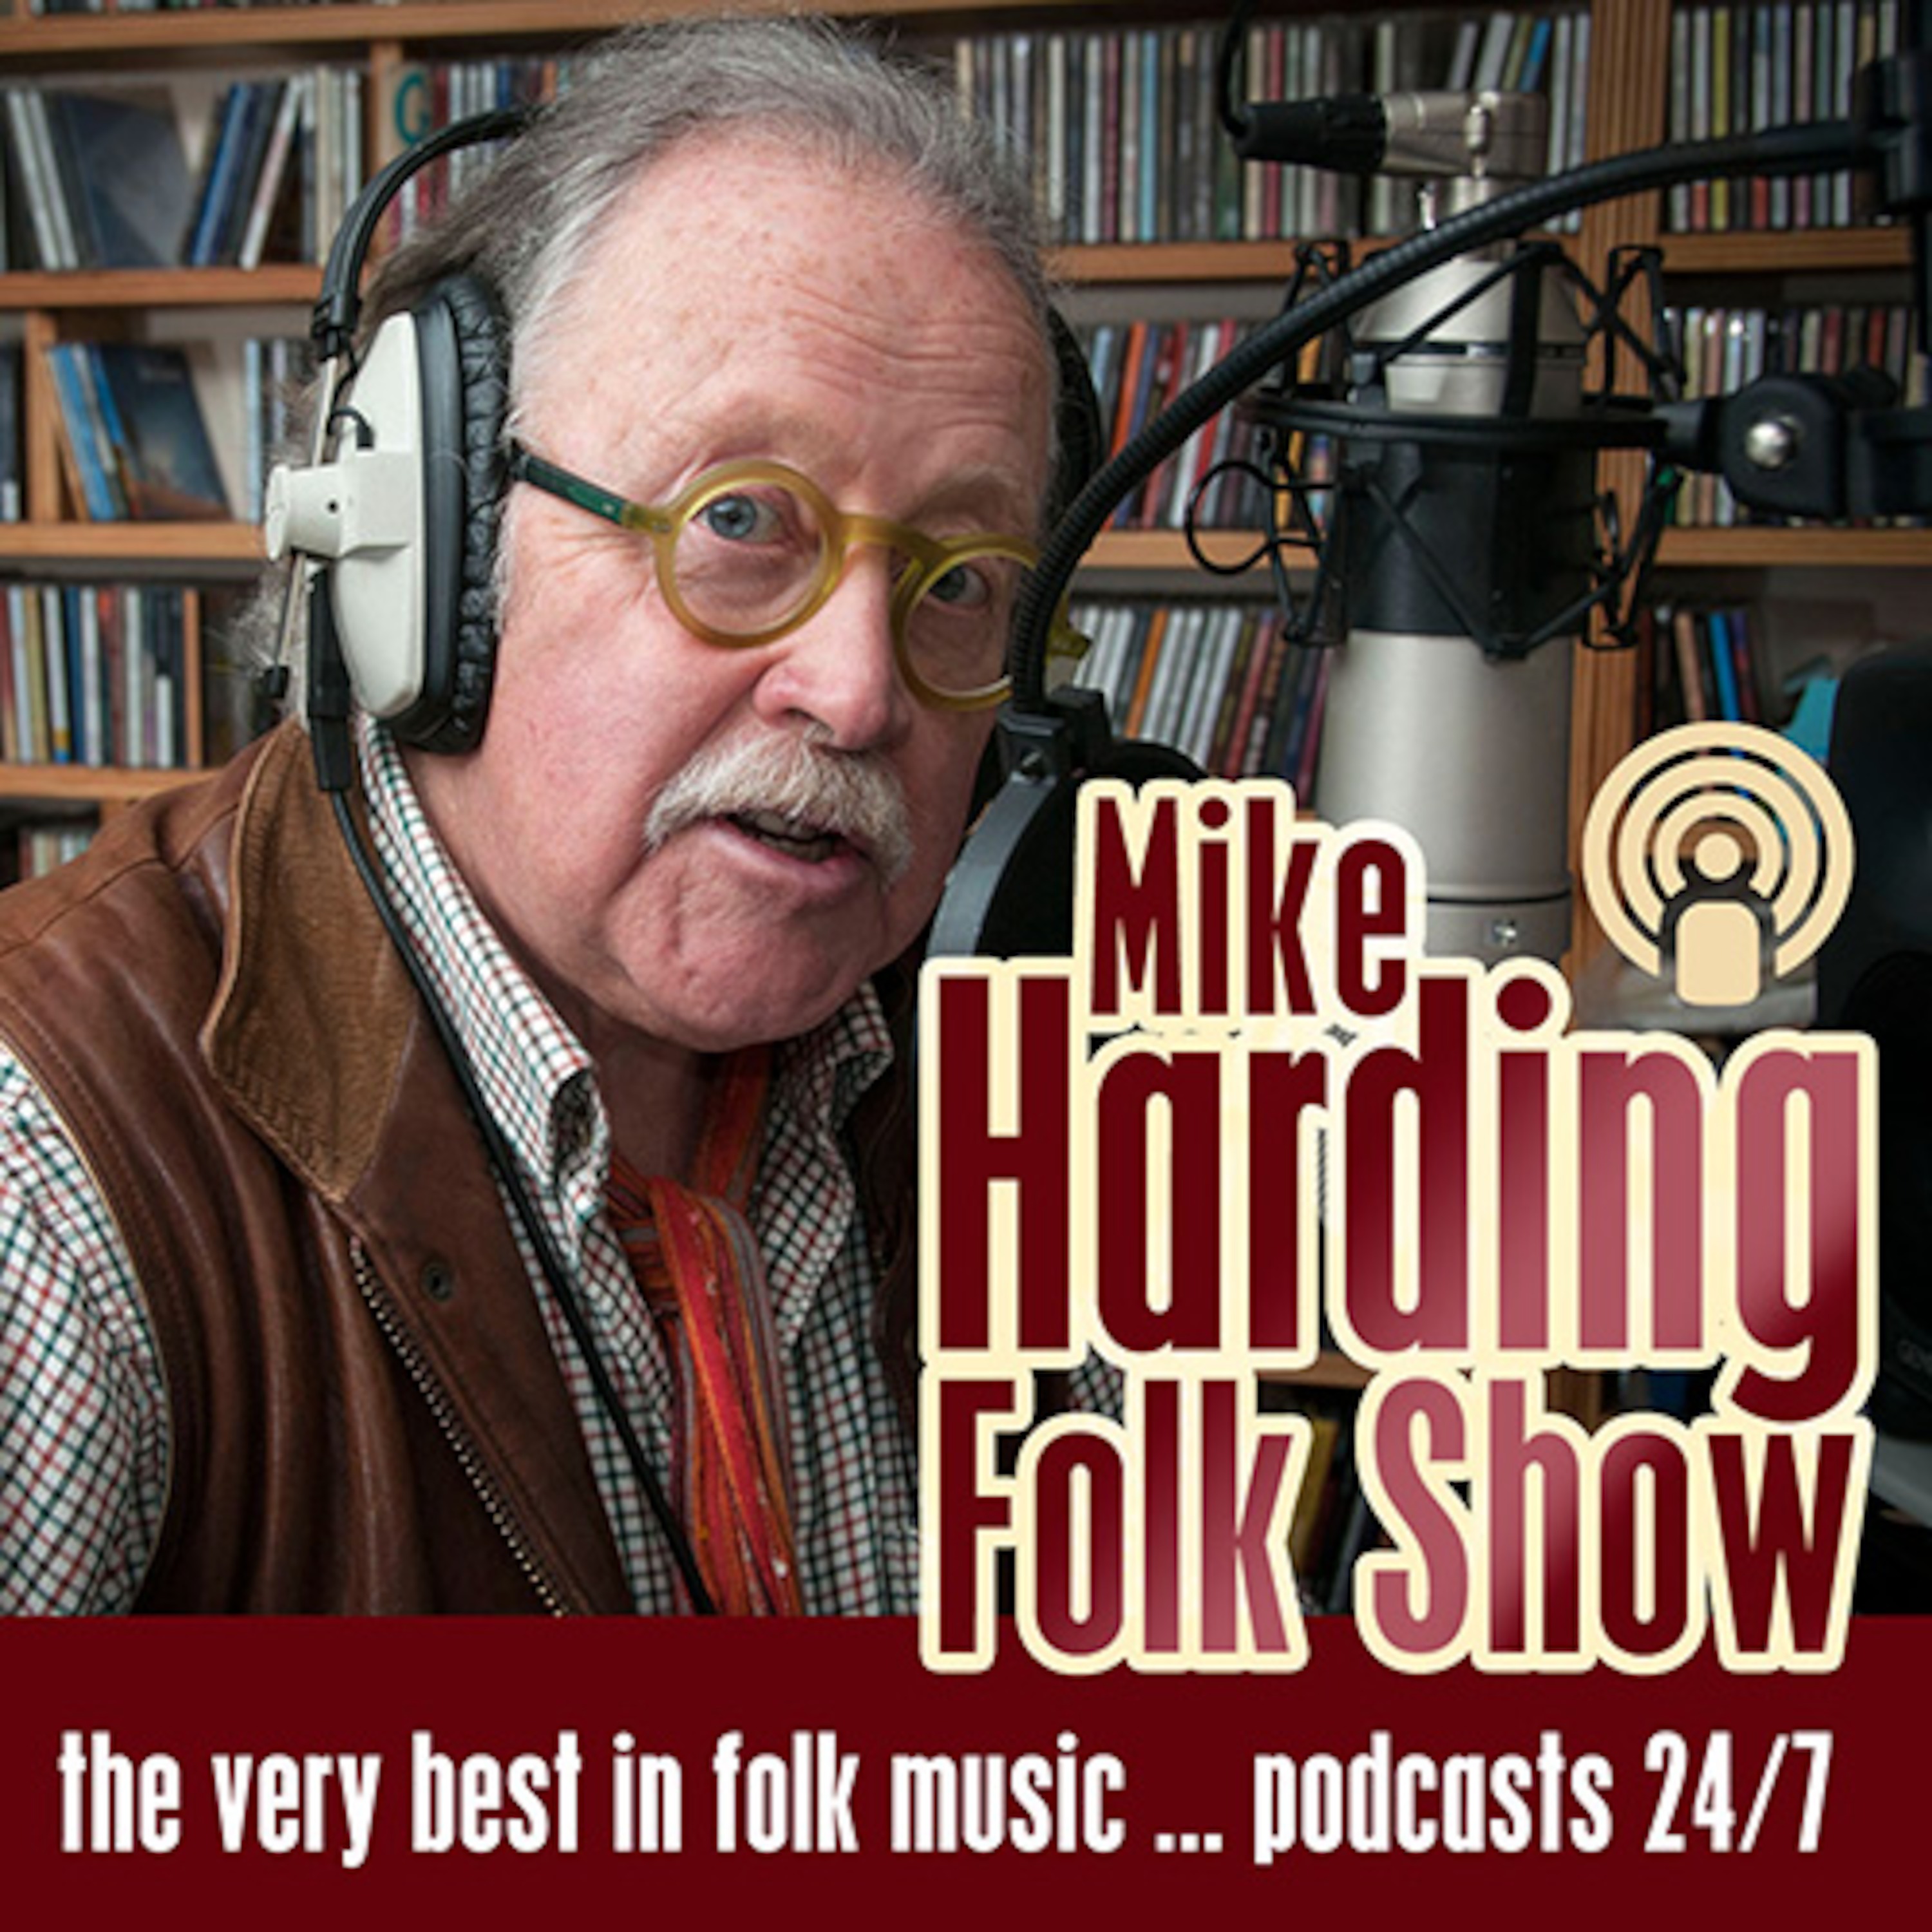 Mike Harding Folk Show 159